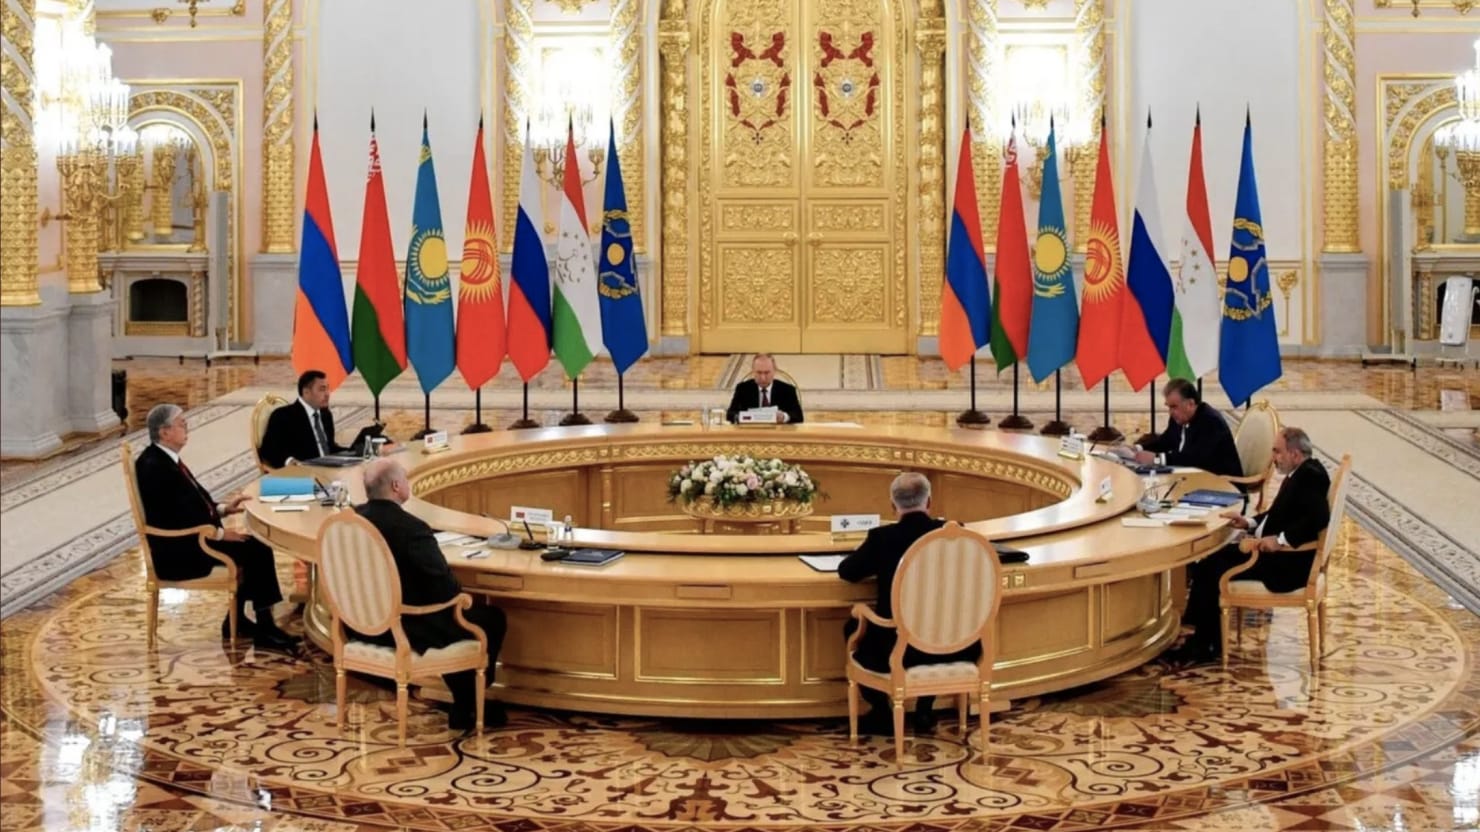 Russian President Vladimir Putin’s allies scolded over Ukraine at CSTO summit